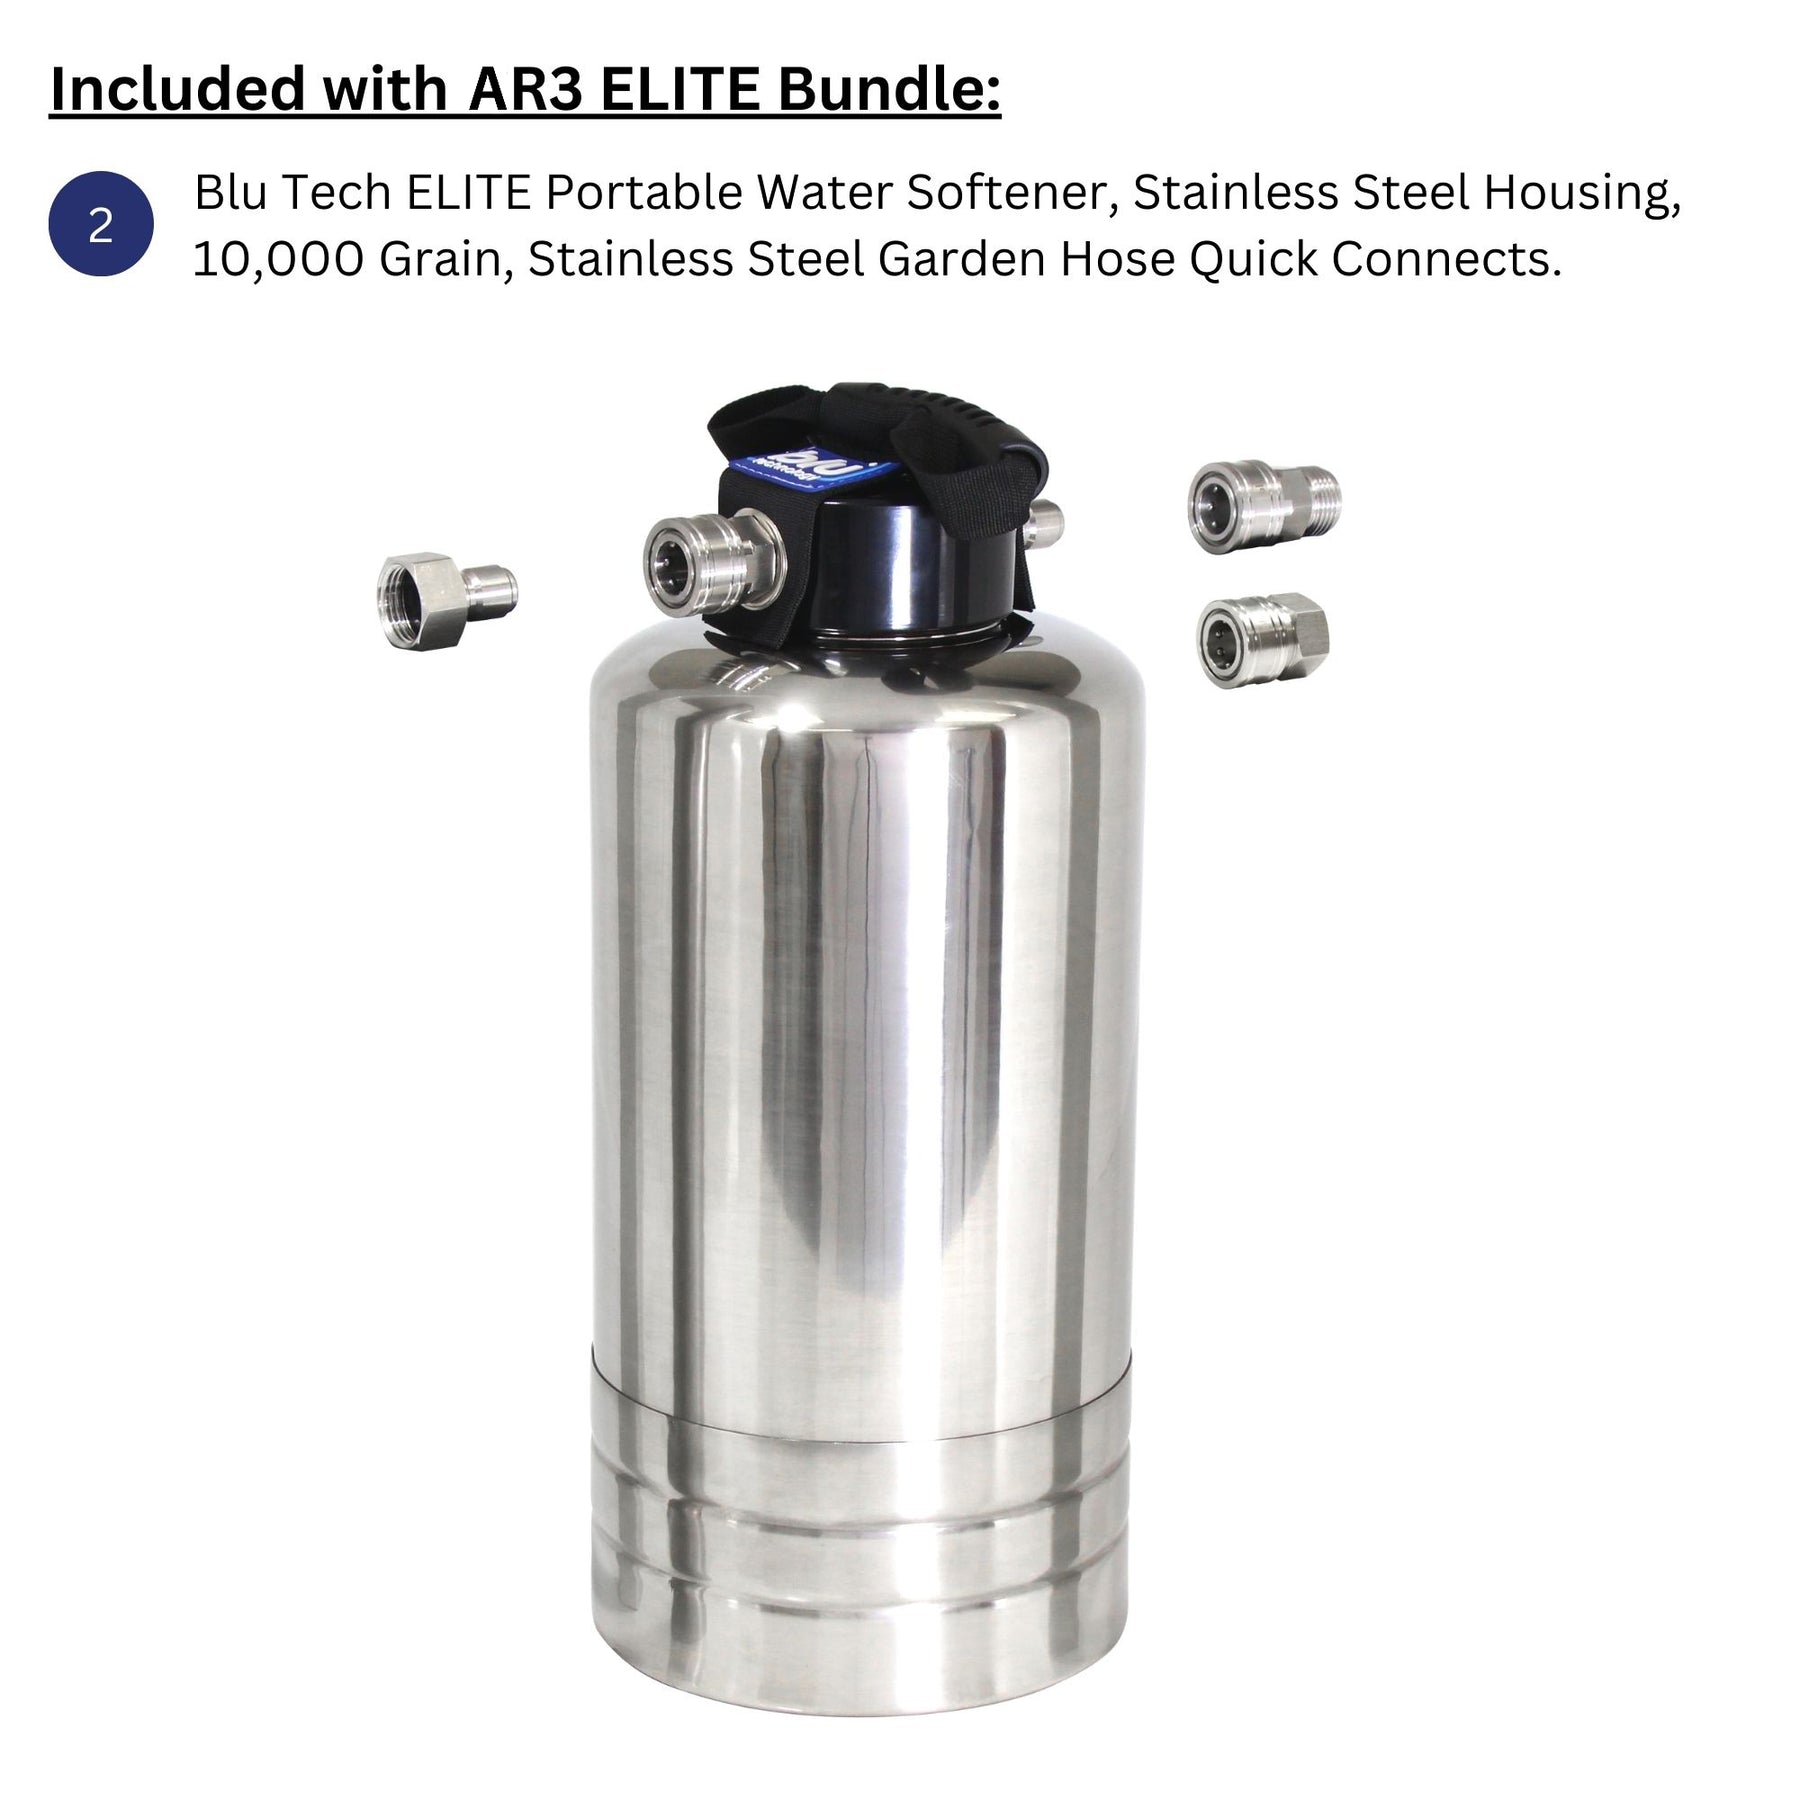 Blu Tech ELITE Portable Water Softener